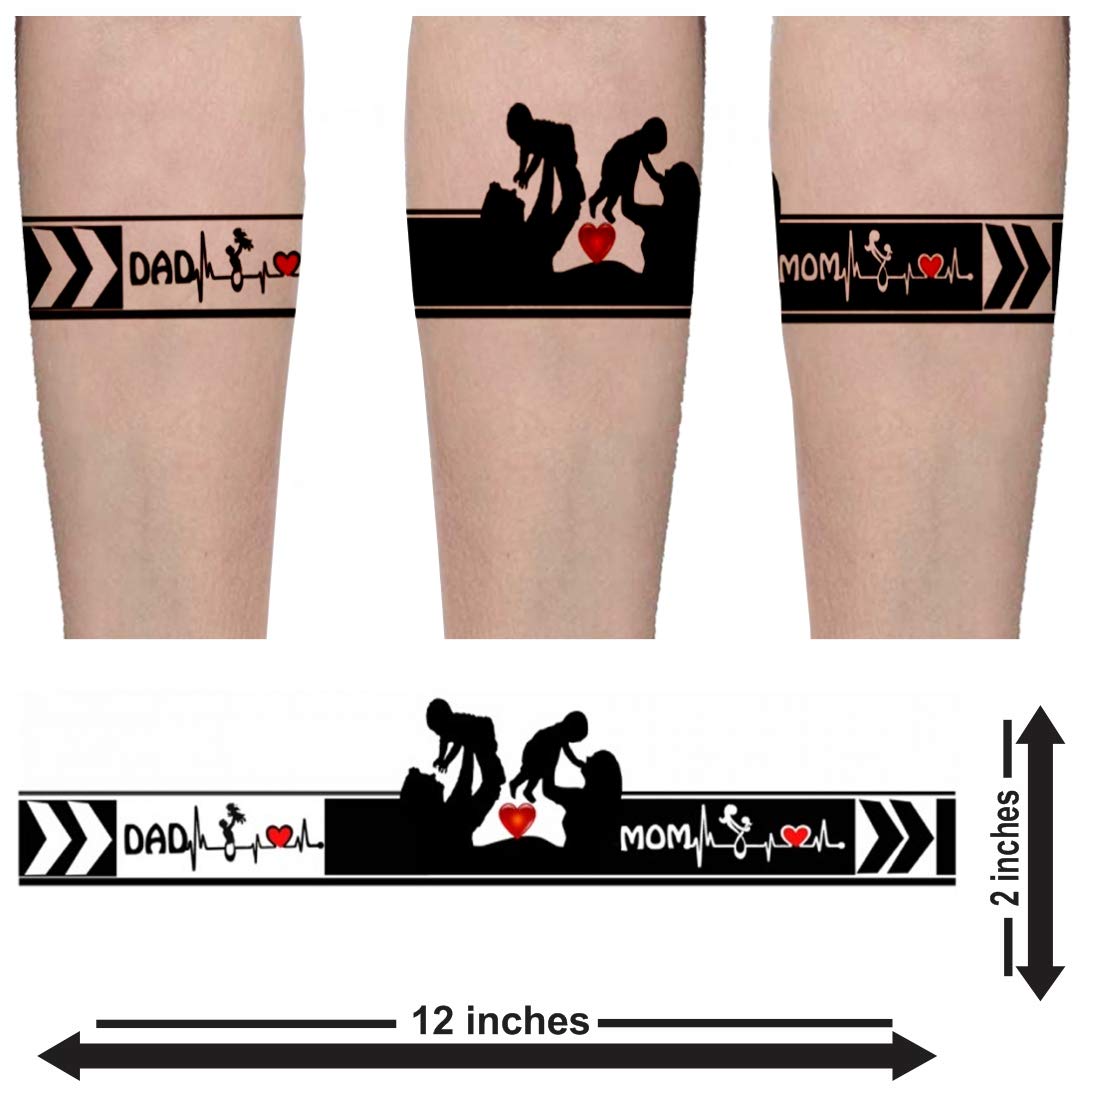 Tattoo uploaded by Samurai Tattoo mehsana • Band tattoo |tattoo for boys |band  tattoo design |armband tattoo • Tattoodo